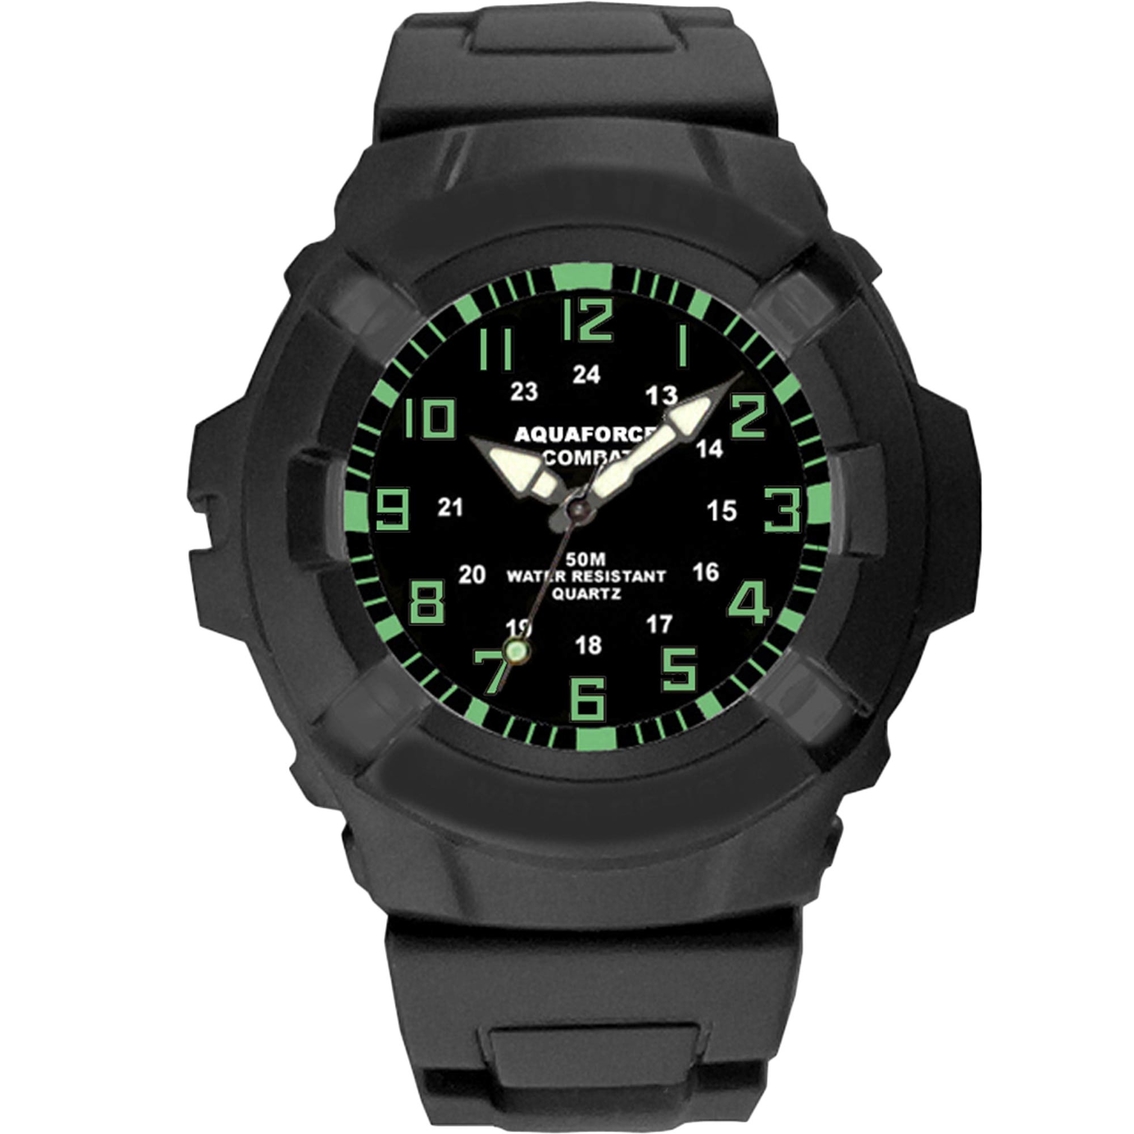 Frontier Aquaforce Marines Analog Quartz Watch 24002X